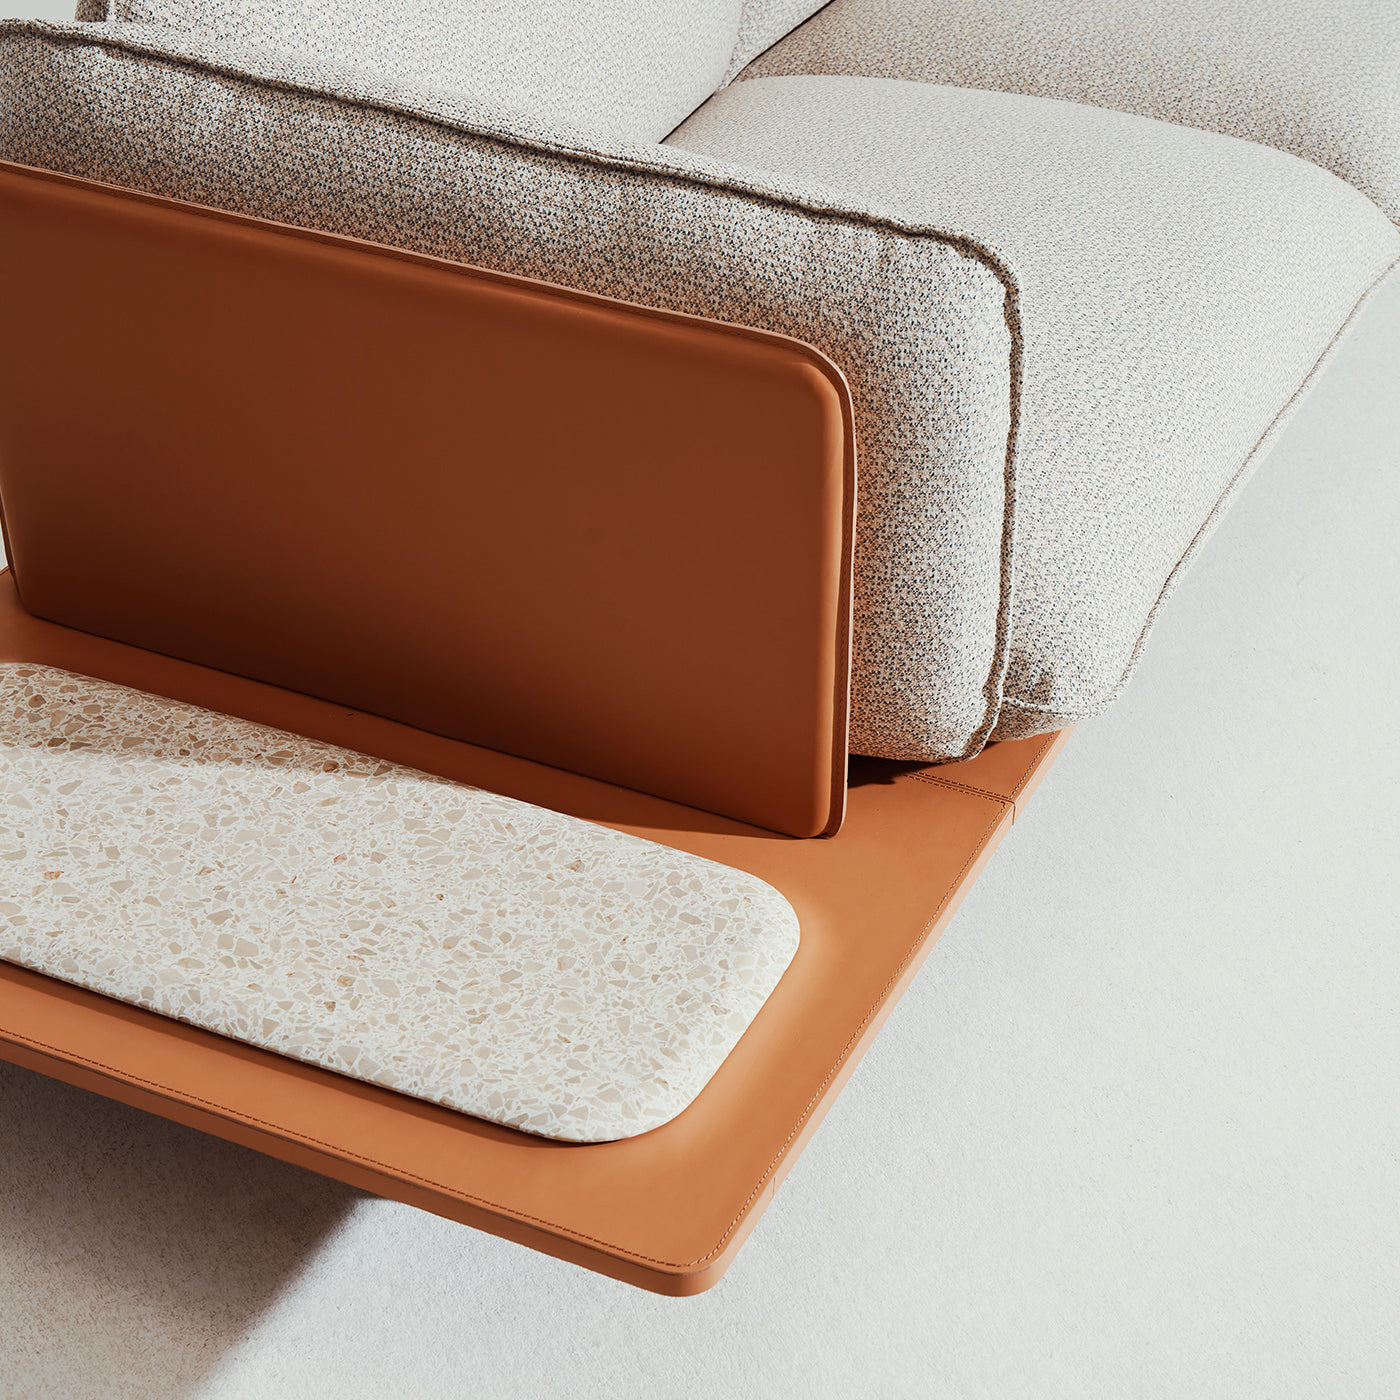 Sahara 2-Seater Sofa by Noé Duchaufour-Lawrance - Alternative view 1